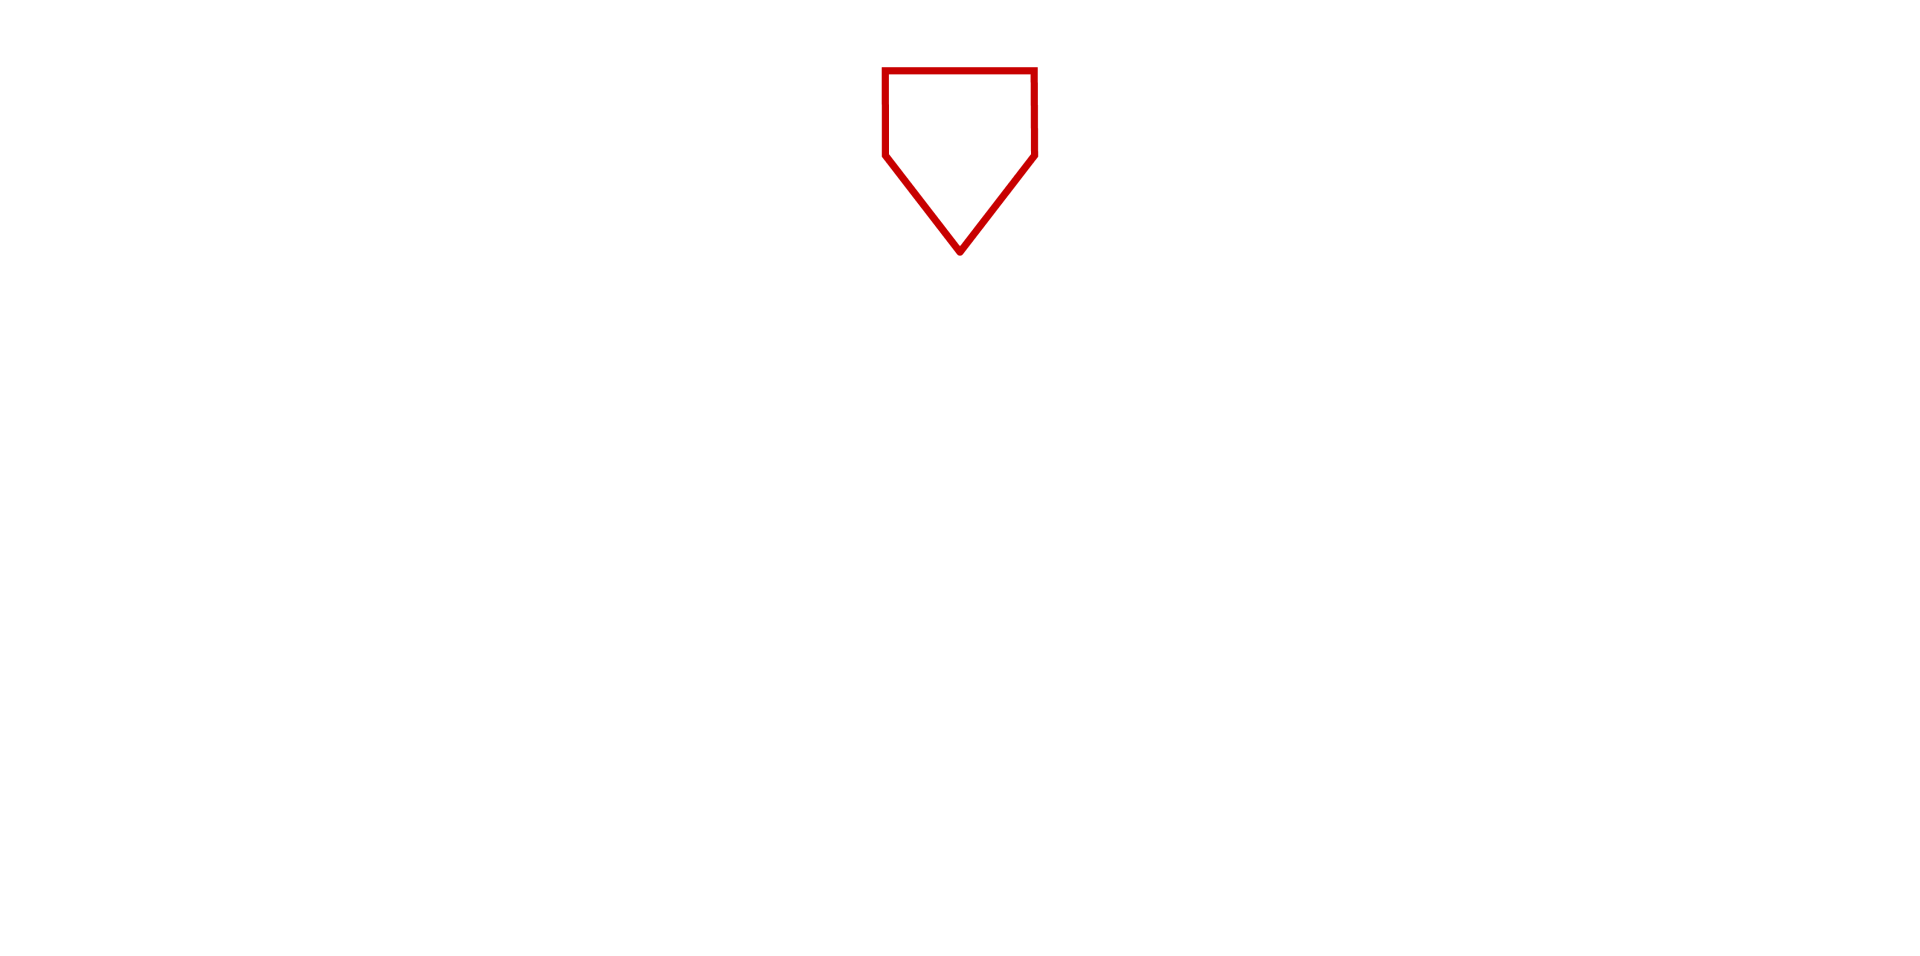 Ristorante La Taverna Logo